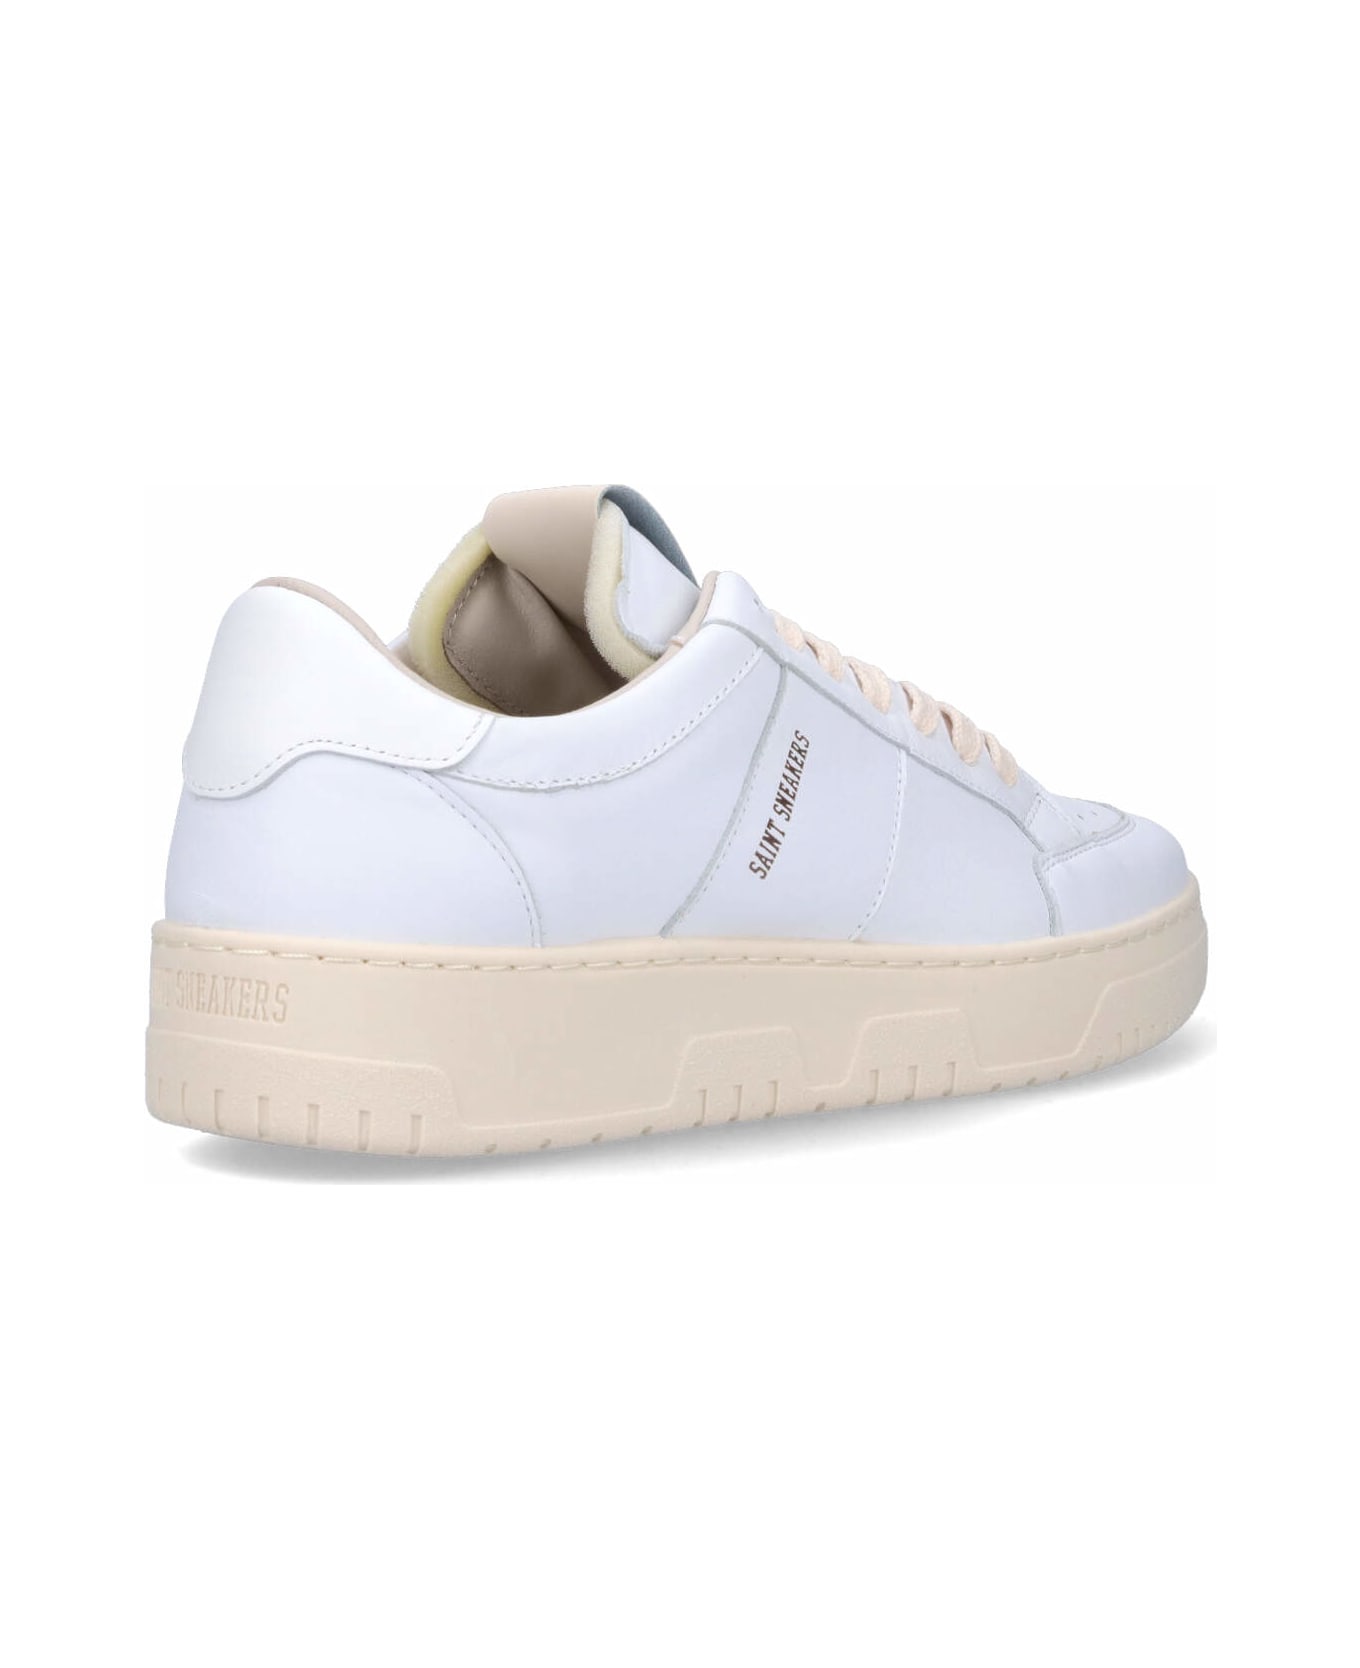 Saint Sneakers "golf" Sneakers - White